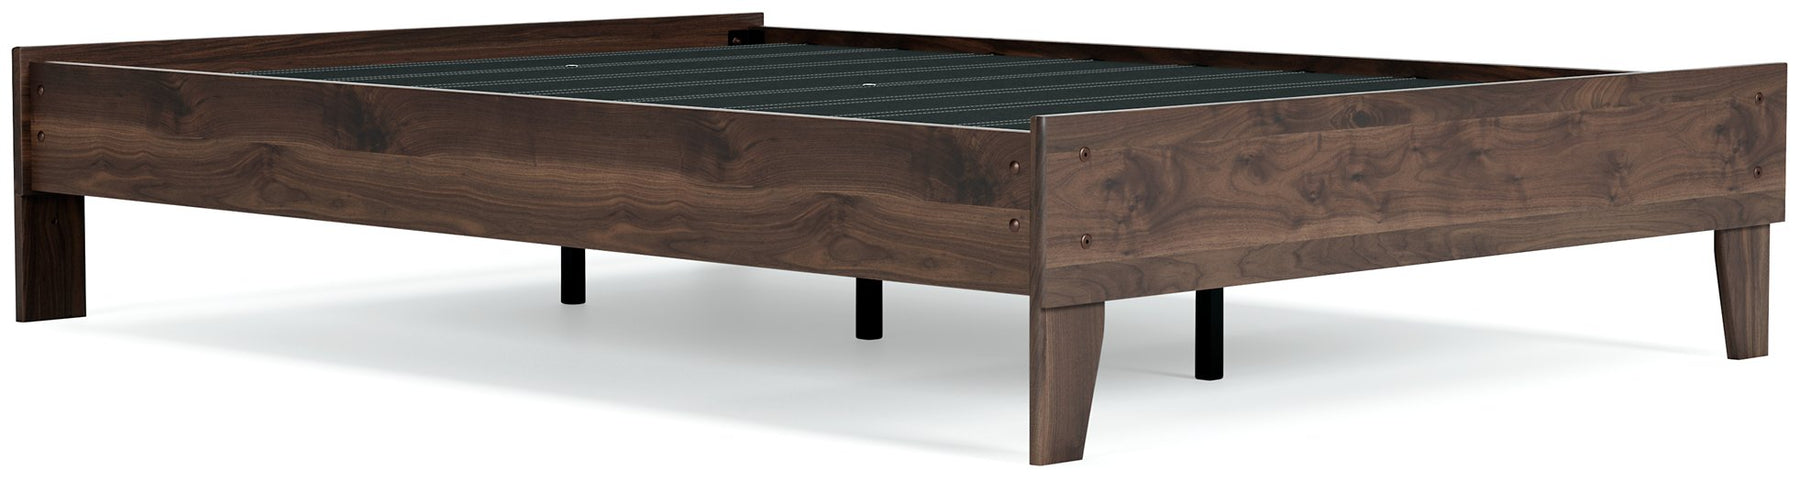 Calverson Panel Bed - Half Price Furniture